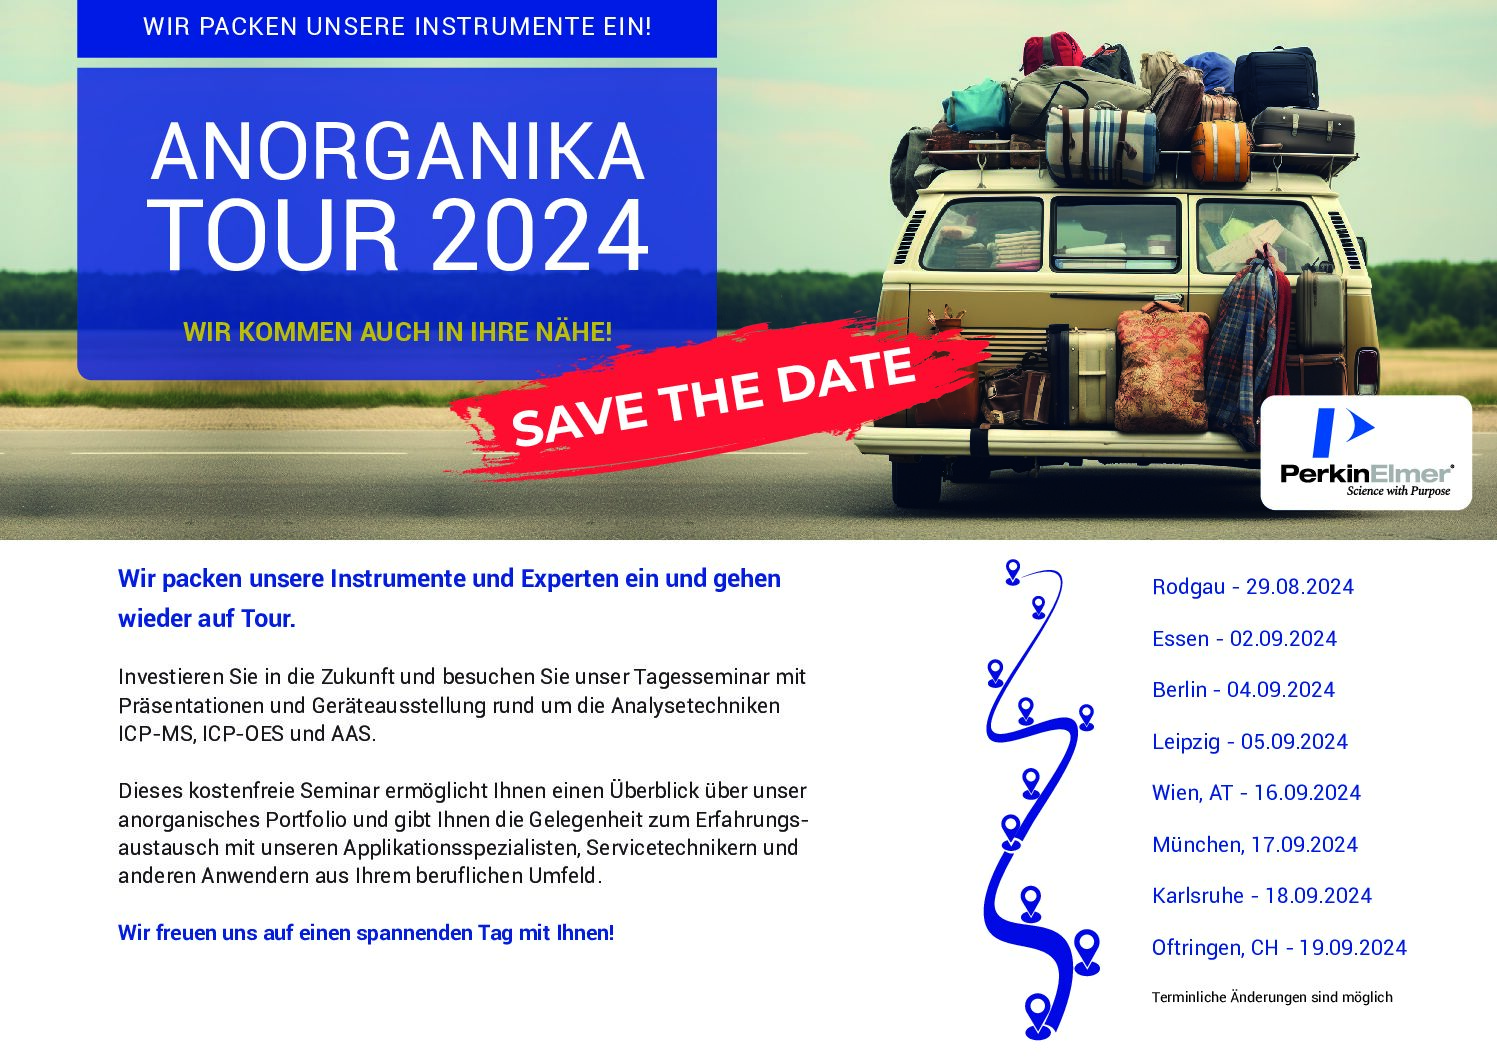 Save the date: ANORGANIKA TOUR 2024